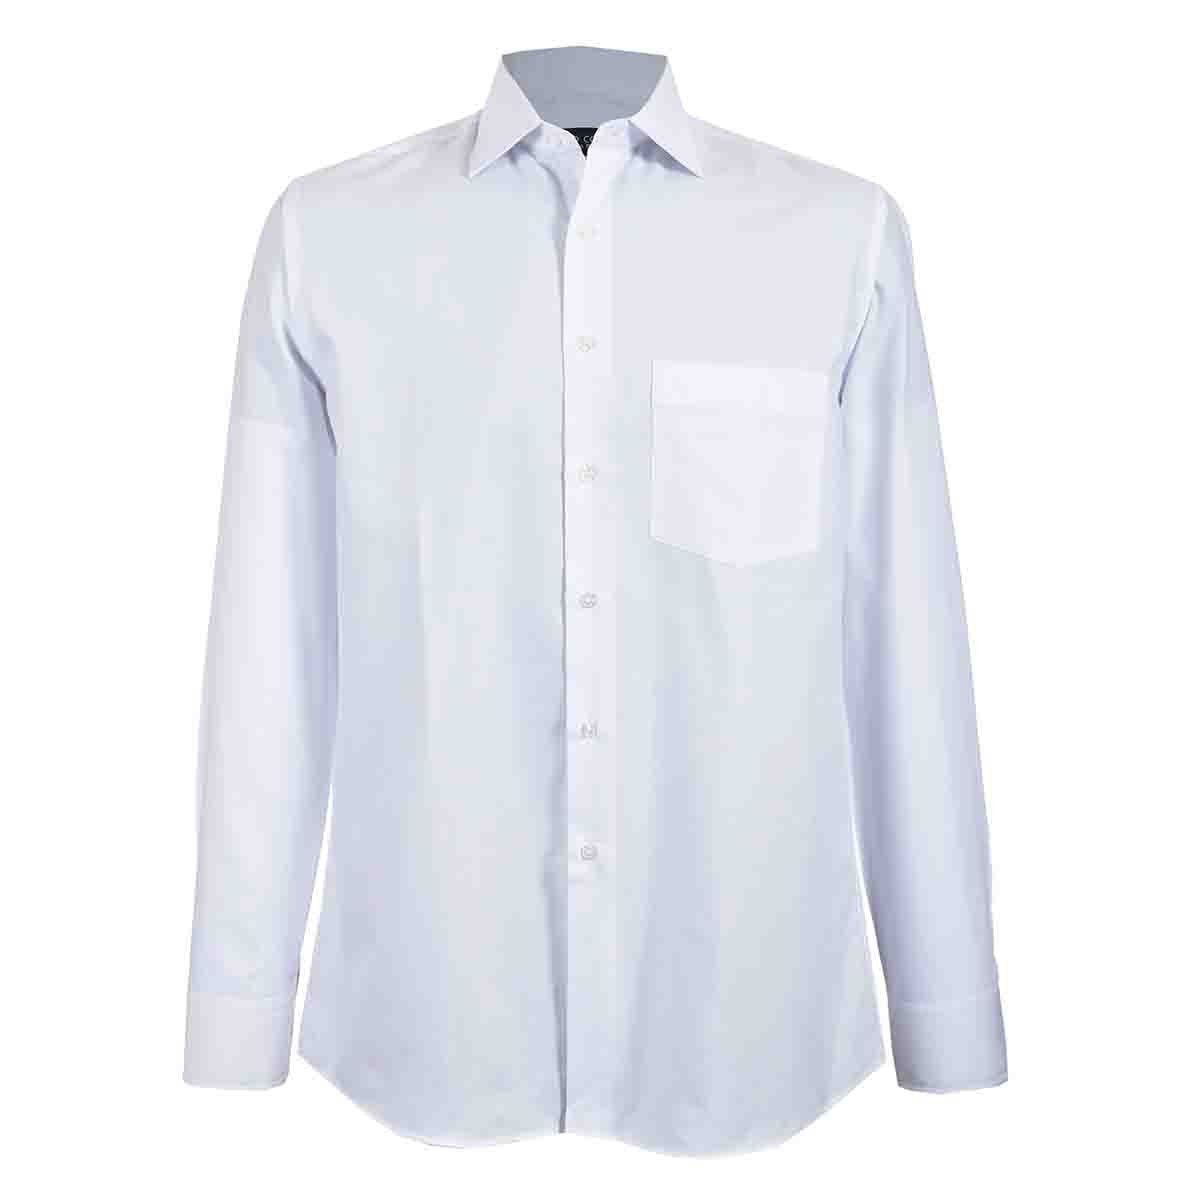 Camisa de Vestir Tradicional Blanco Secf 08 Carlo Corinto para Caballero